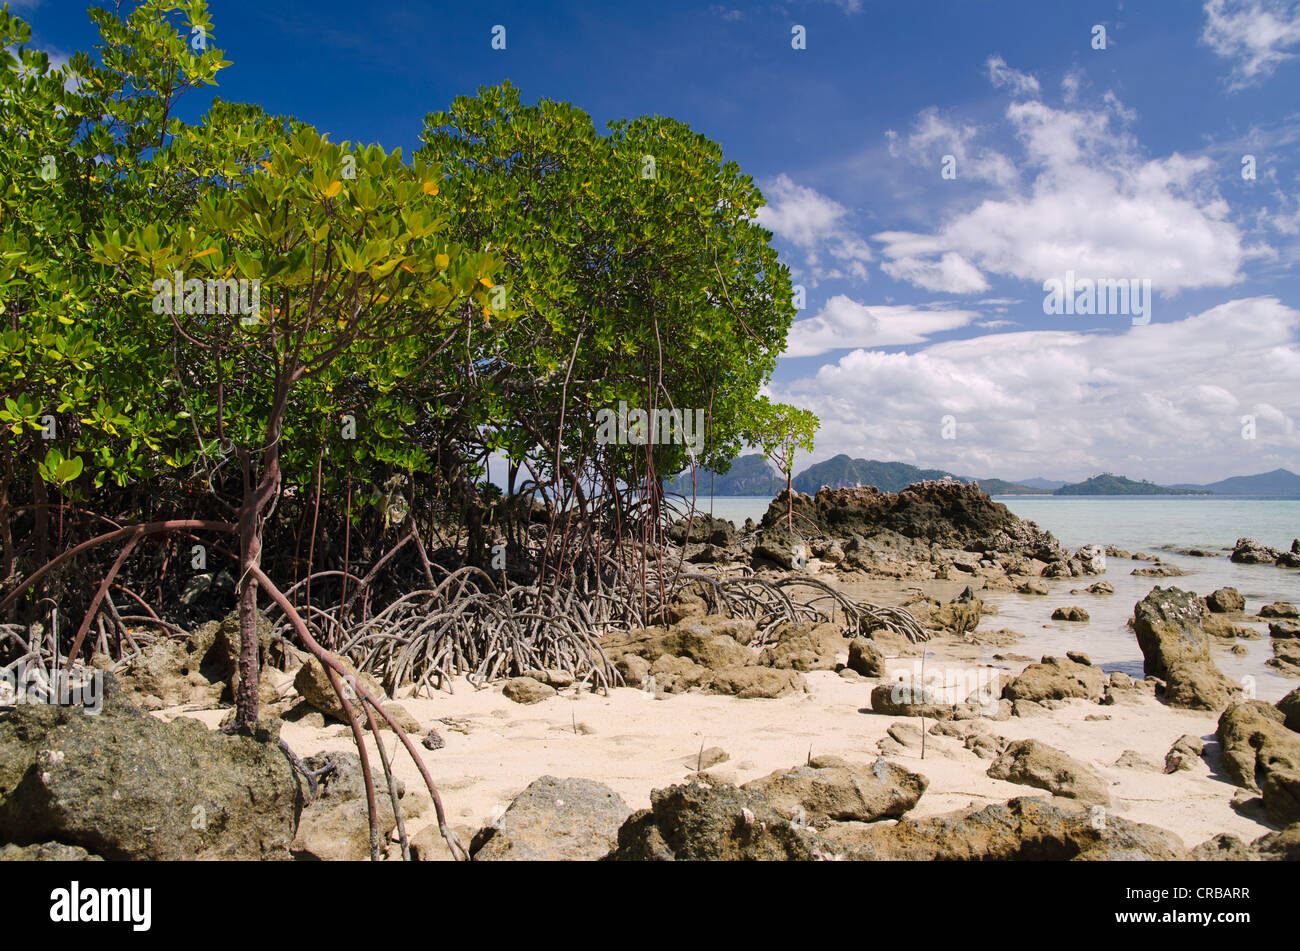 Mangroves on the beach, Koh Kradan island, Trang province, Thailand, Southeast Asia, Asia Stock Photo